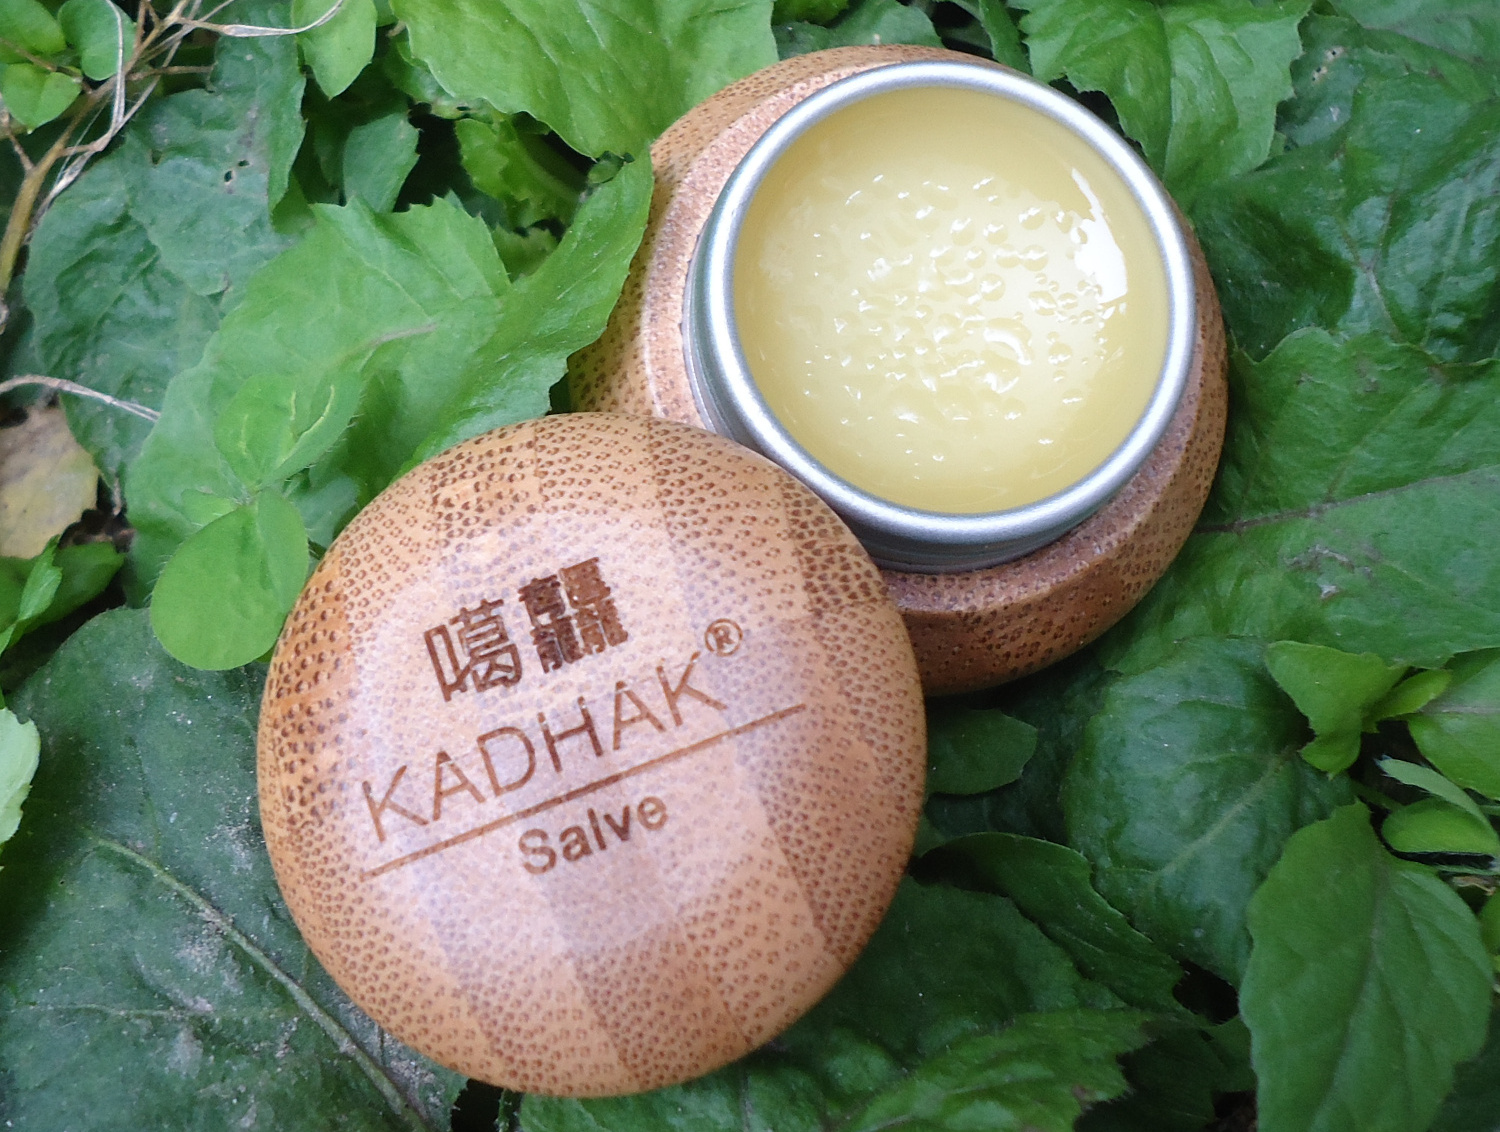 <p>New Kadhak Products</p>